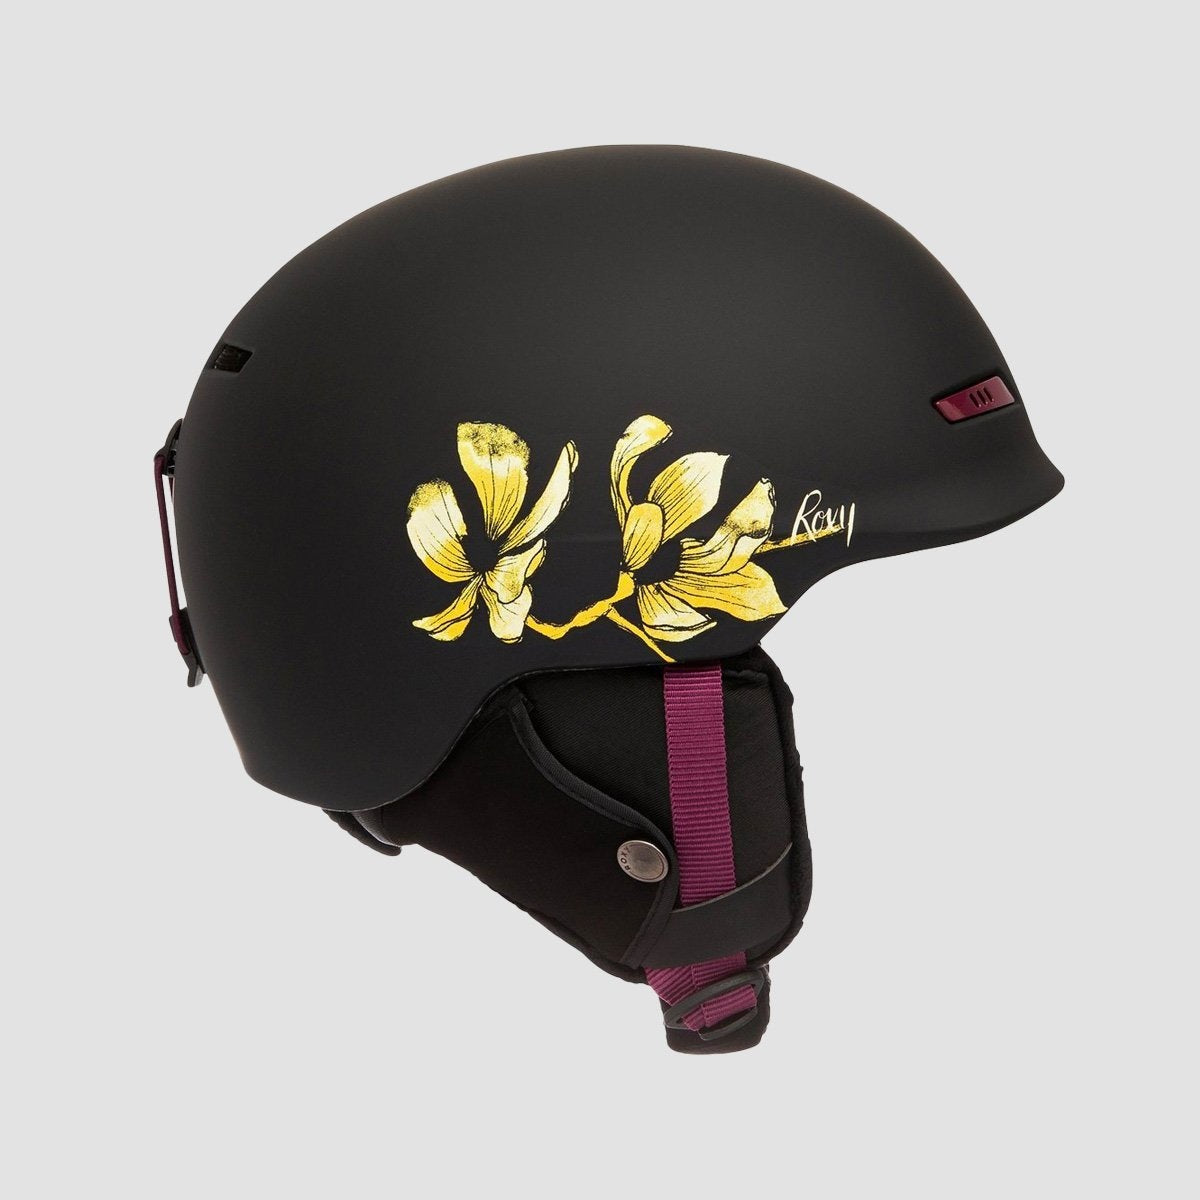 Angie - Snowboard/Ski Helmet for Women